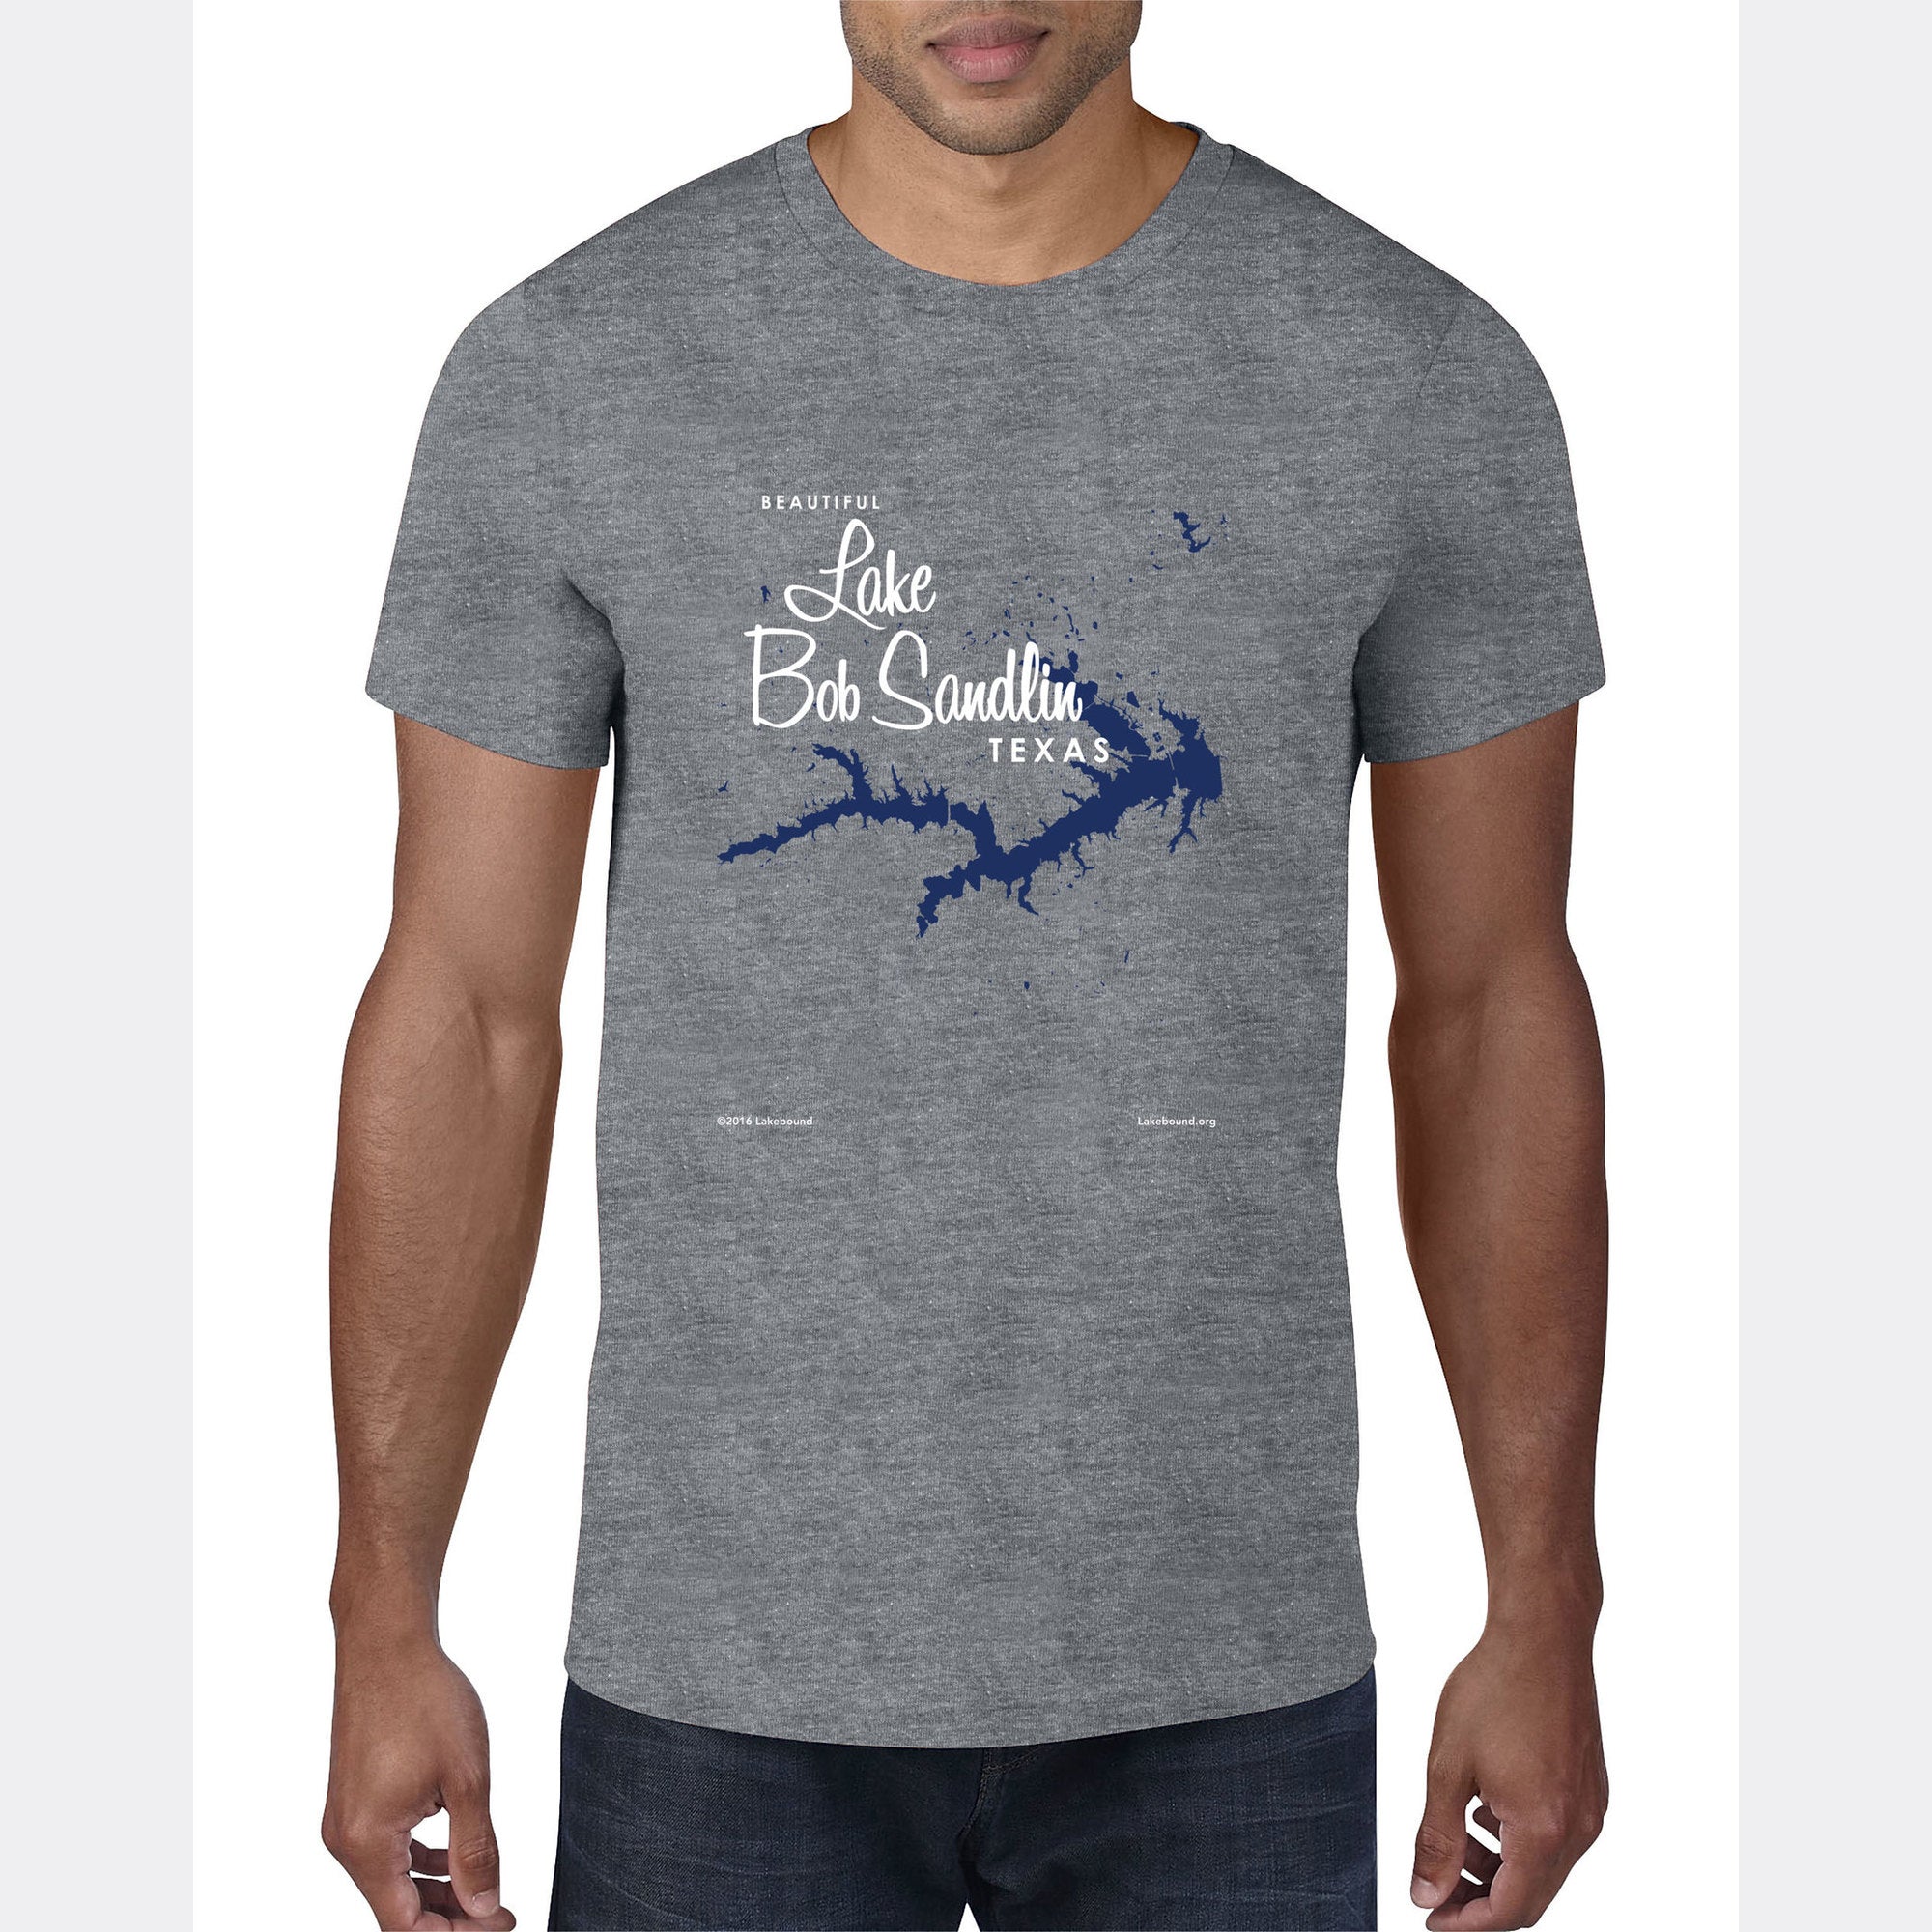 Lake Bob Sandlin Texas, T-Shirt